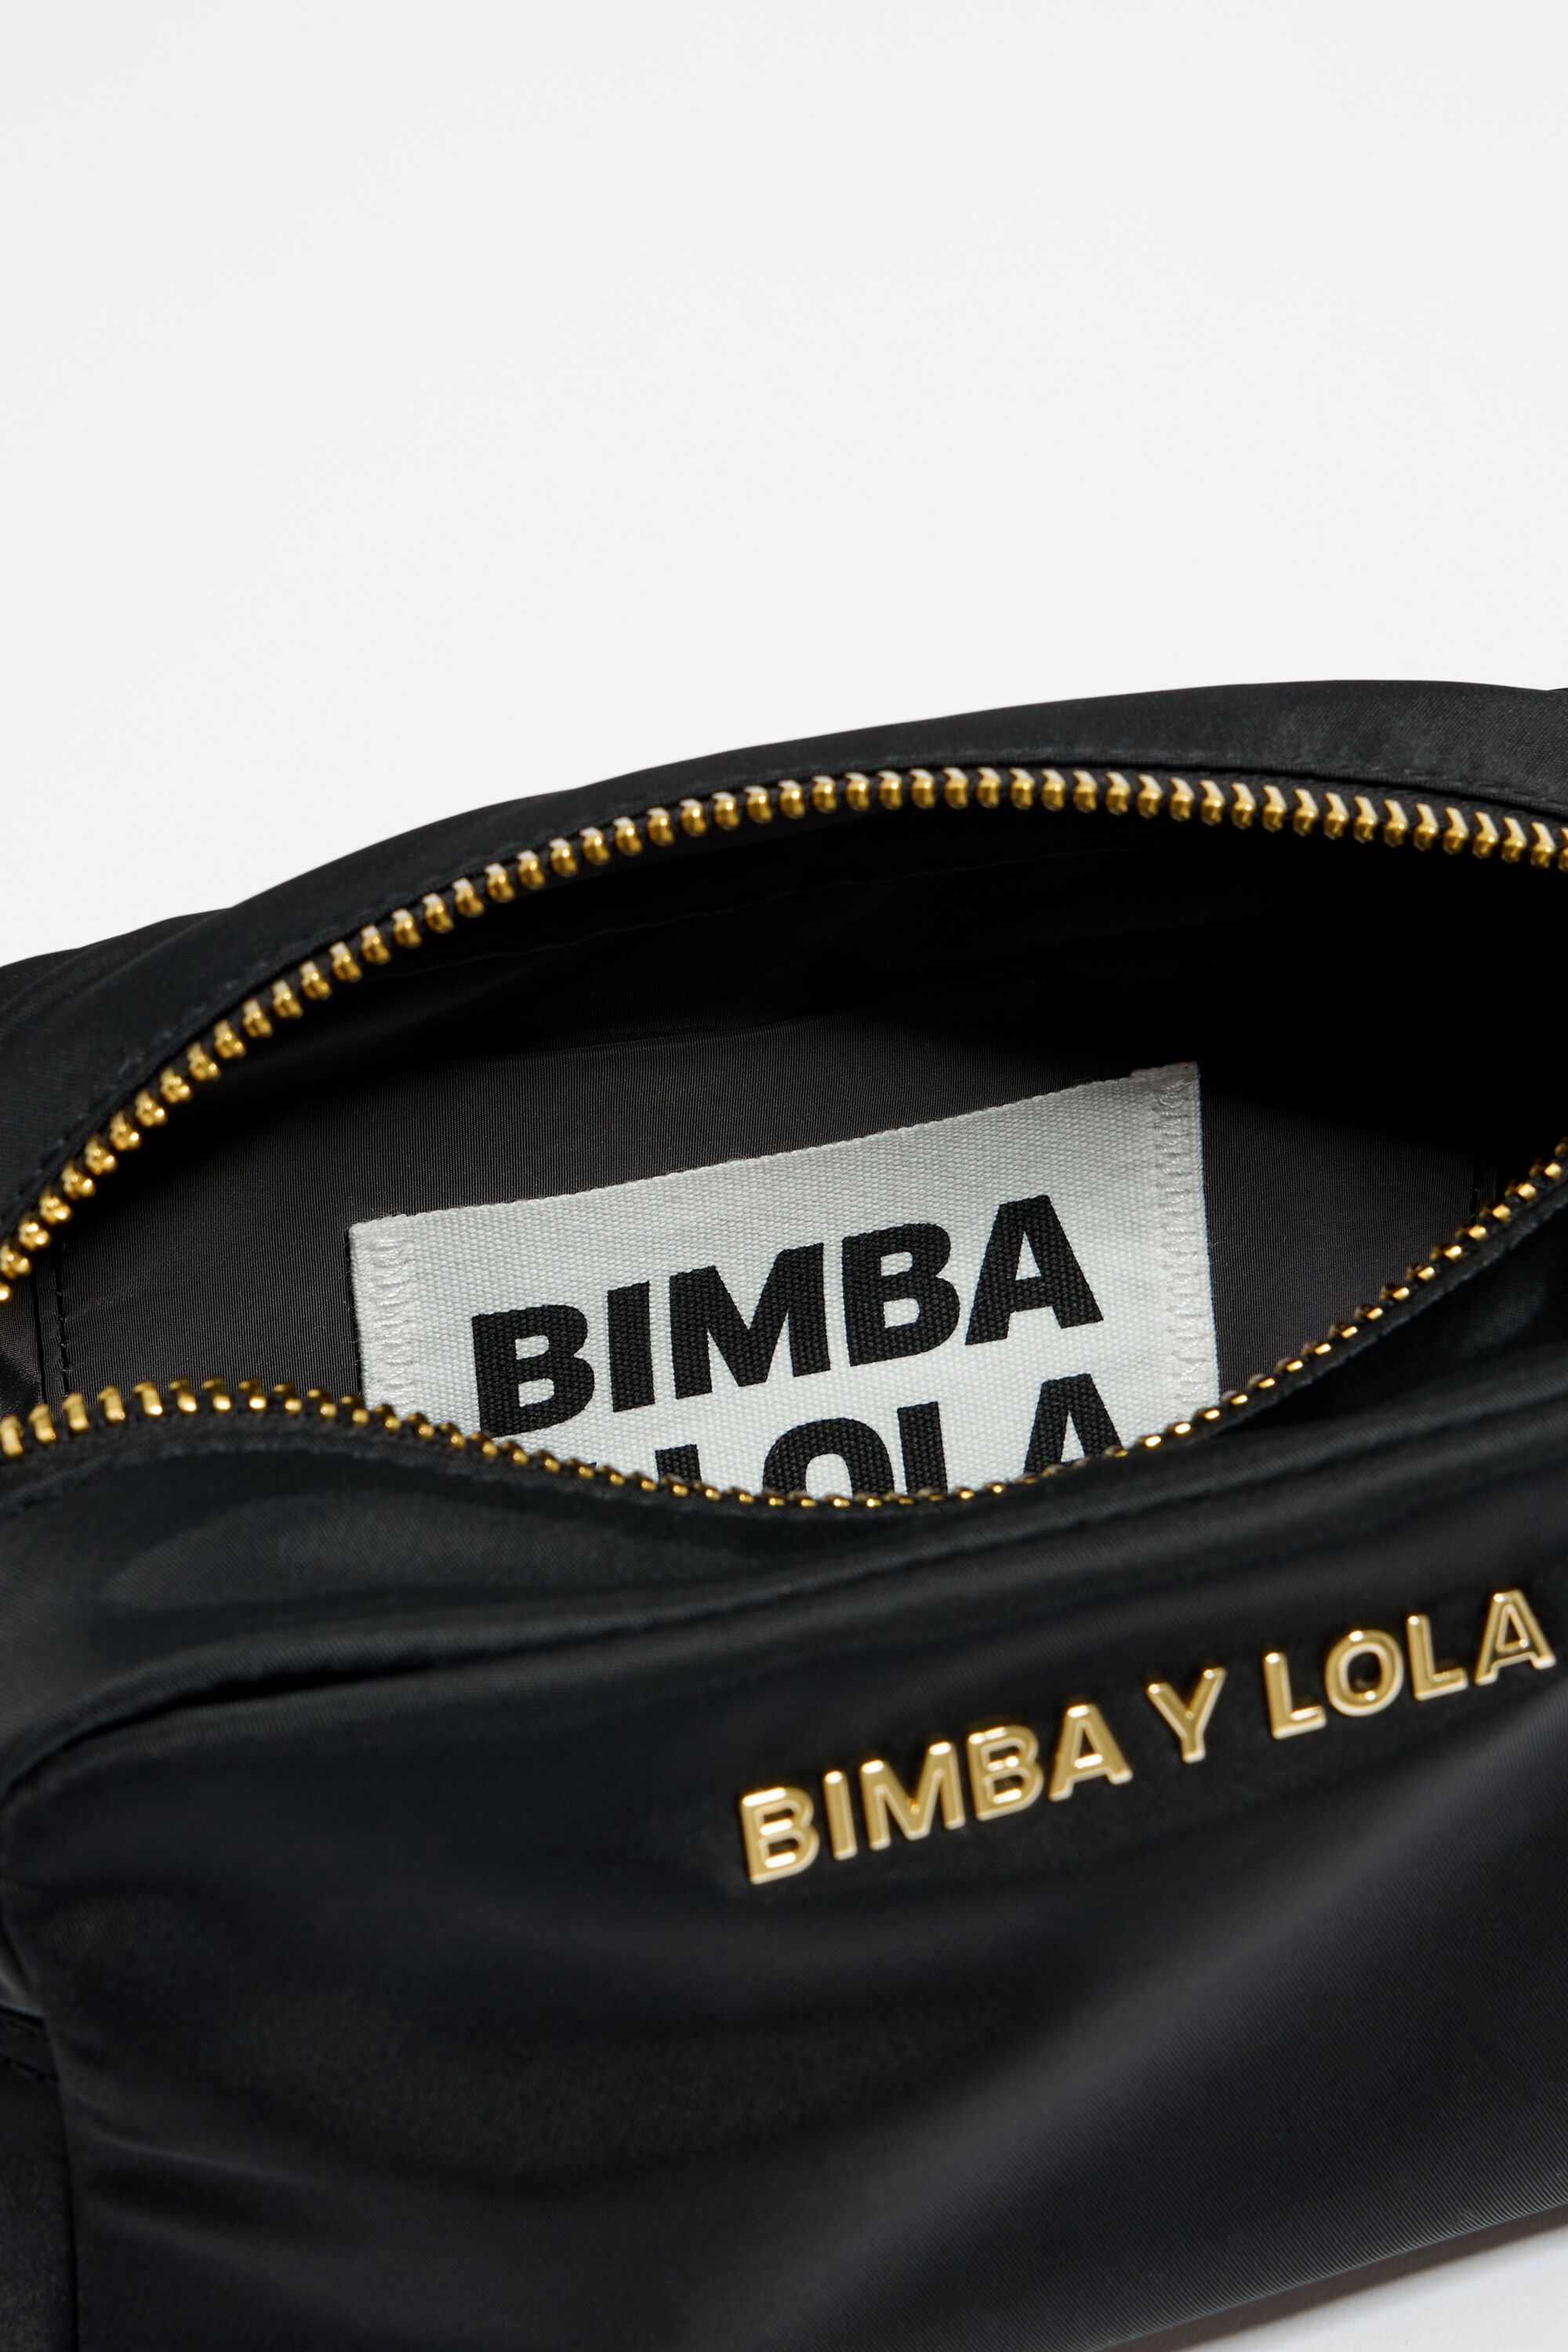 Bimba Y Lola S Crossbody Bag